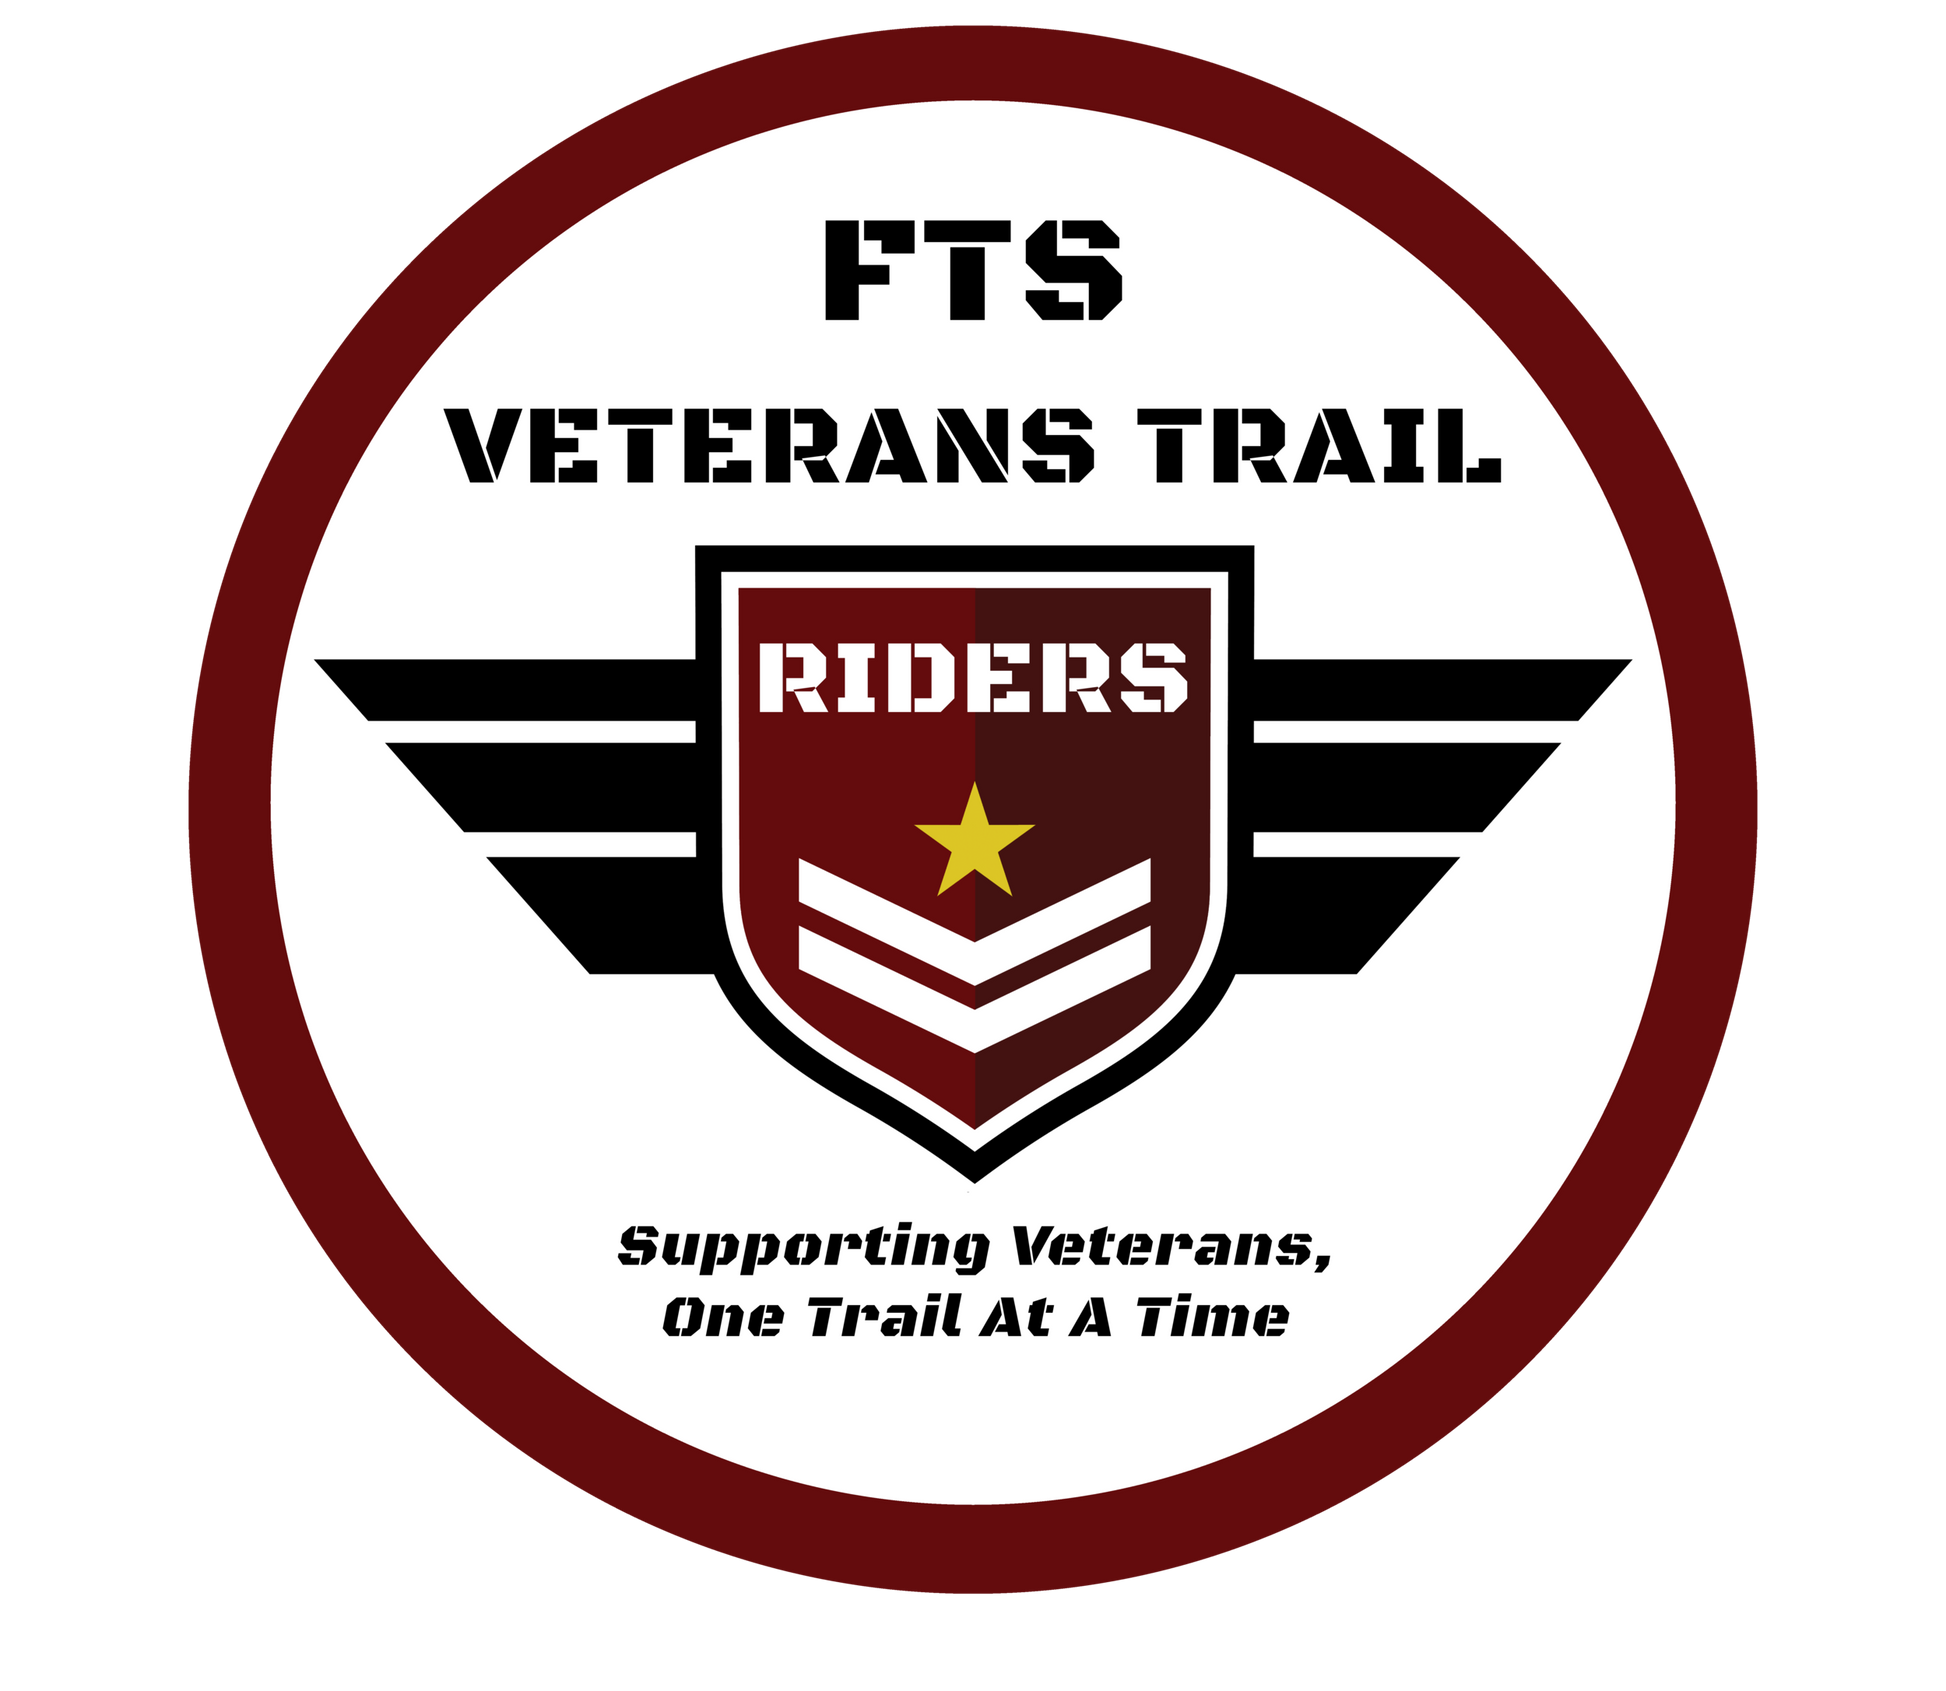 FTS Veterans Trail Riders Logo